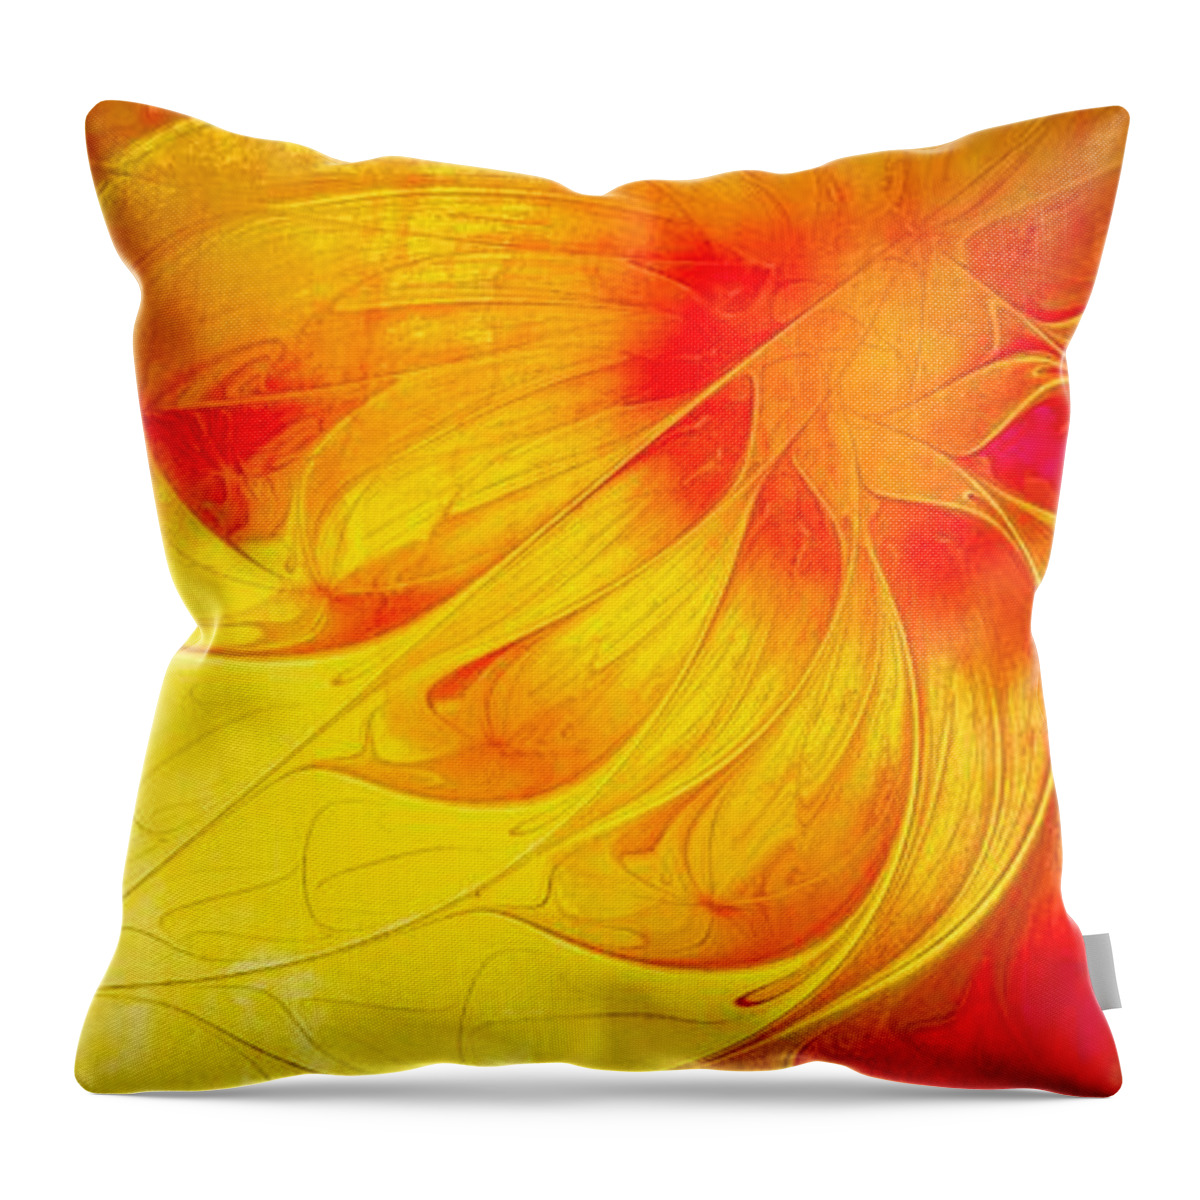 Digital Art Throw Pillow featuring the digital art Blooming Spring by Amanda Moore